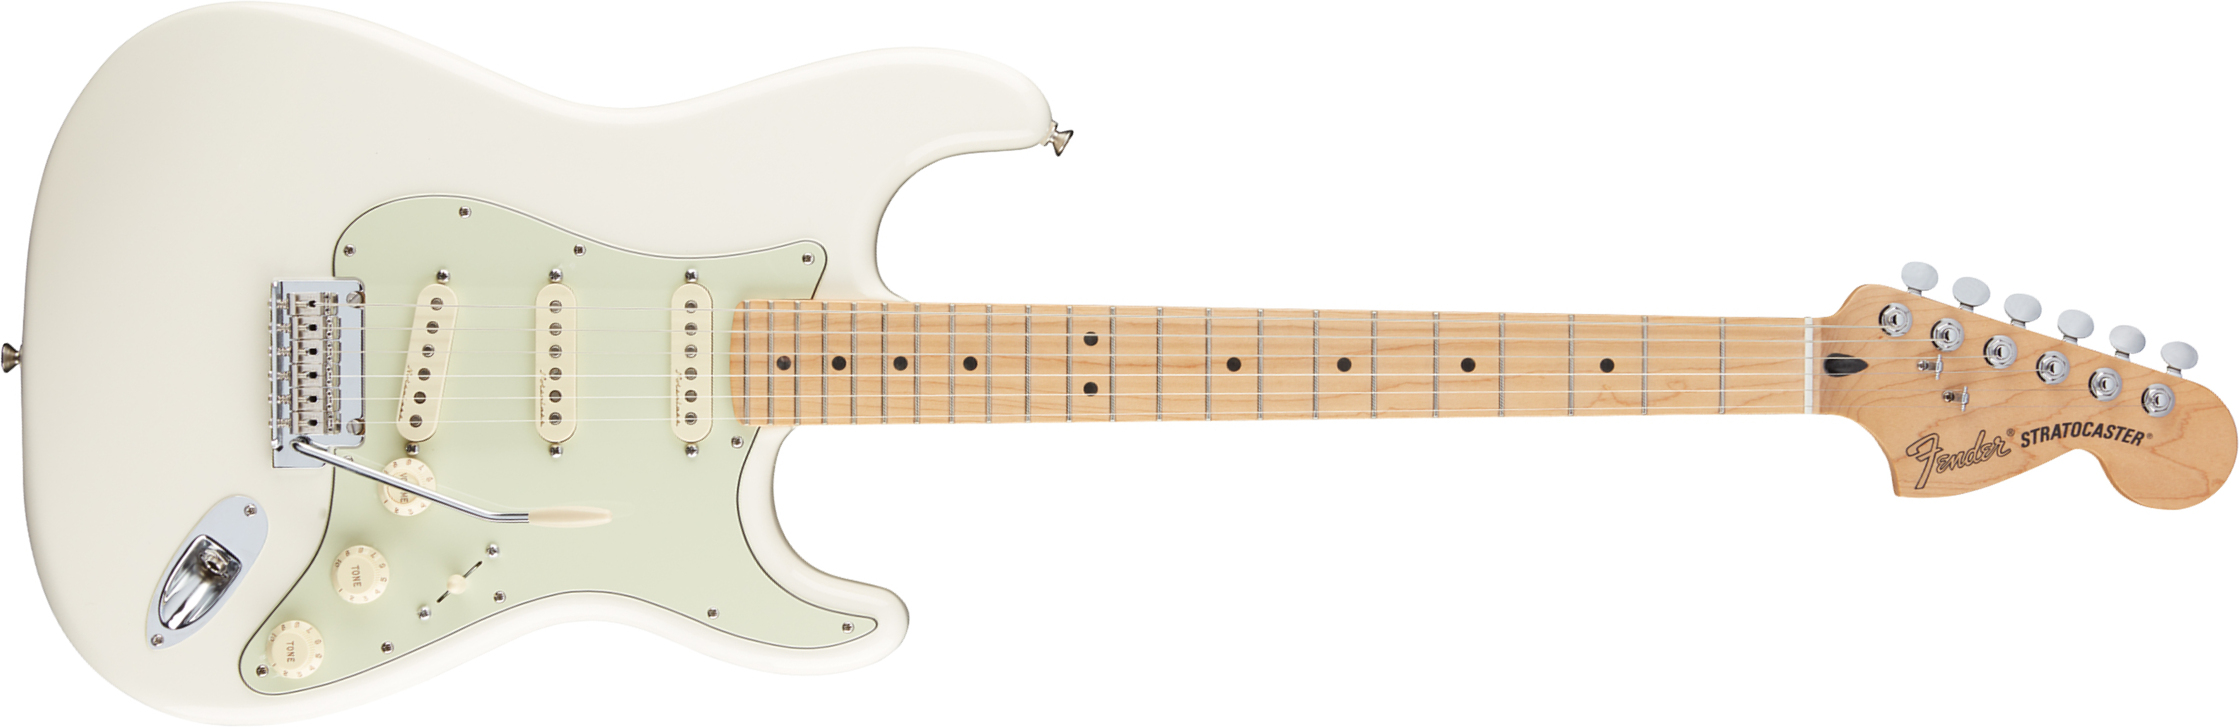 Fender Strat Deluxe Roadhouse Mex Mn - Olympic White - E-Gitarre in Str-Form - Main picture